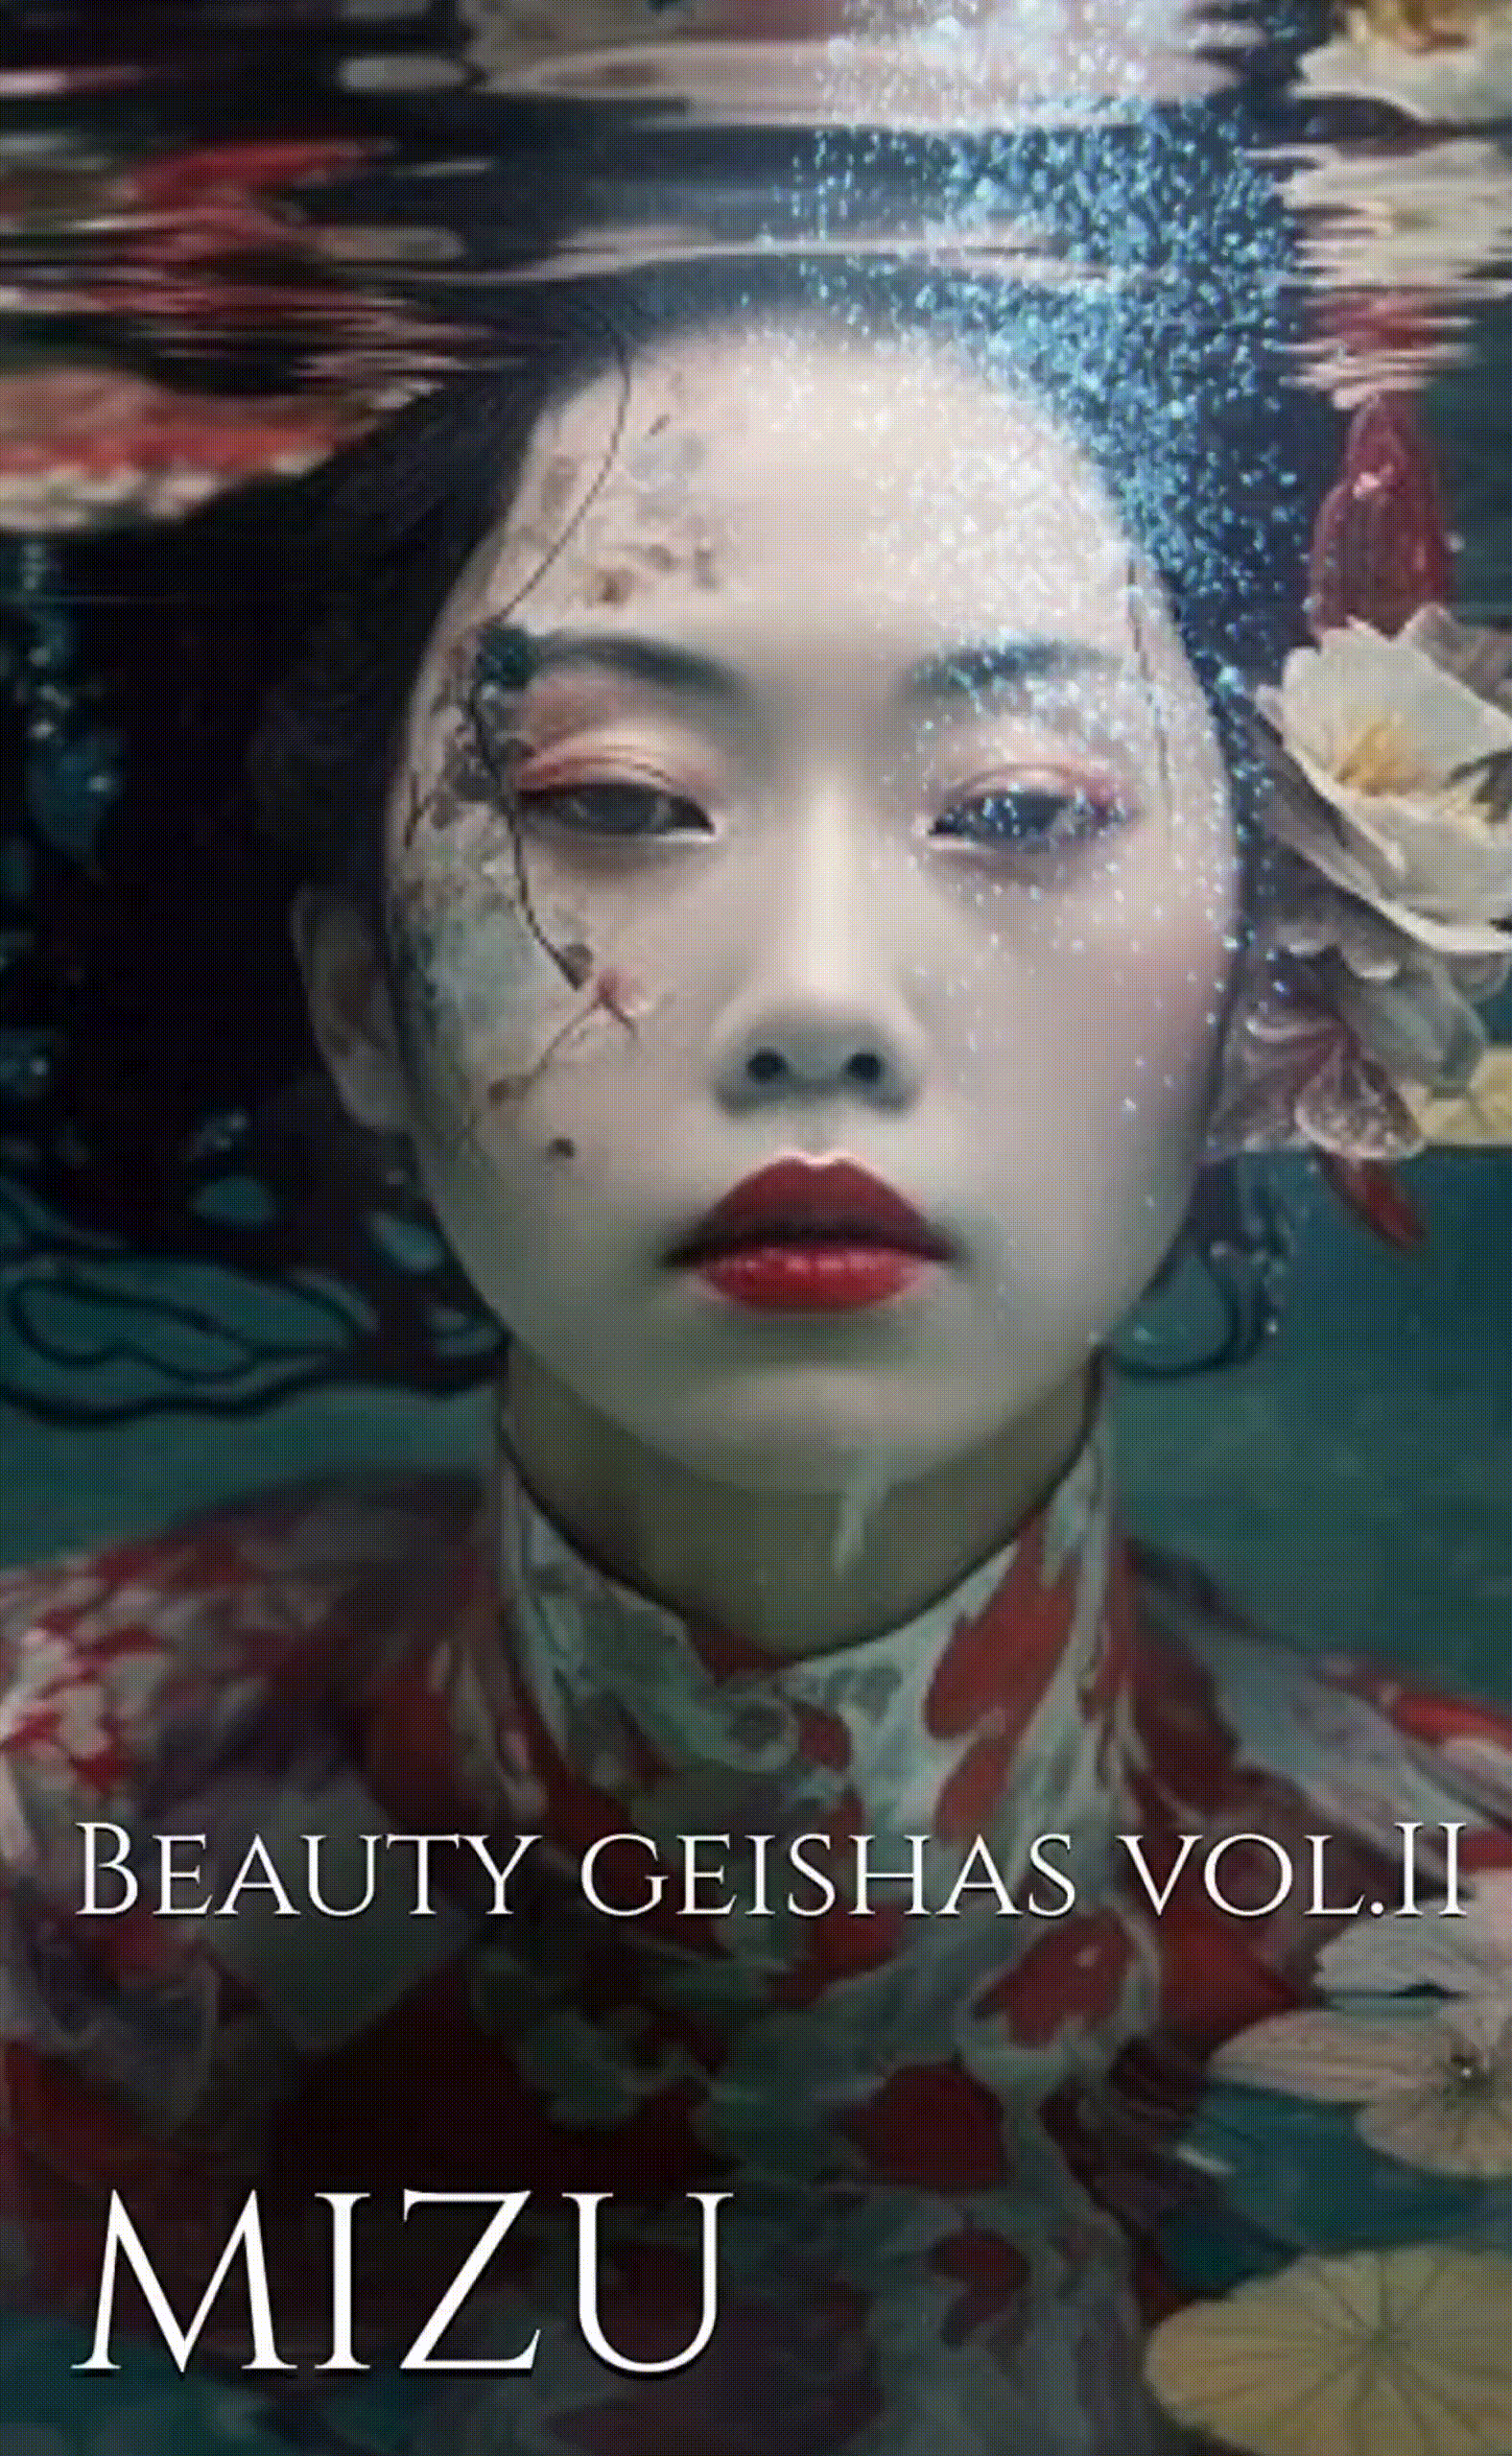 MIZU- Beauty Geishas